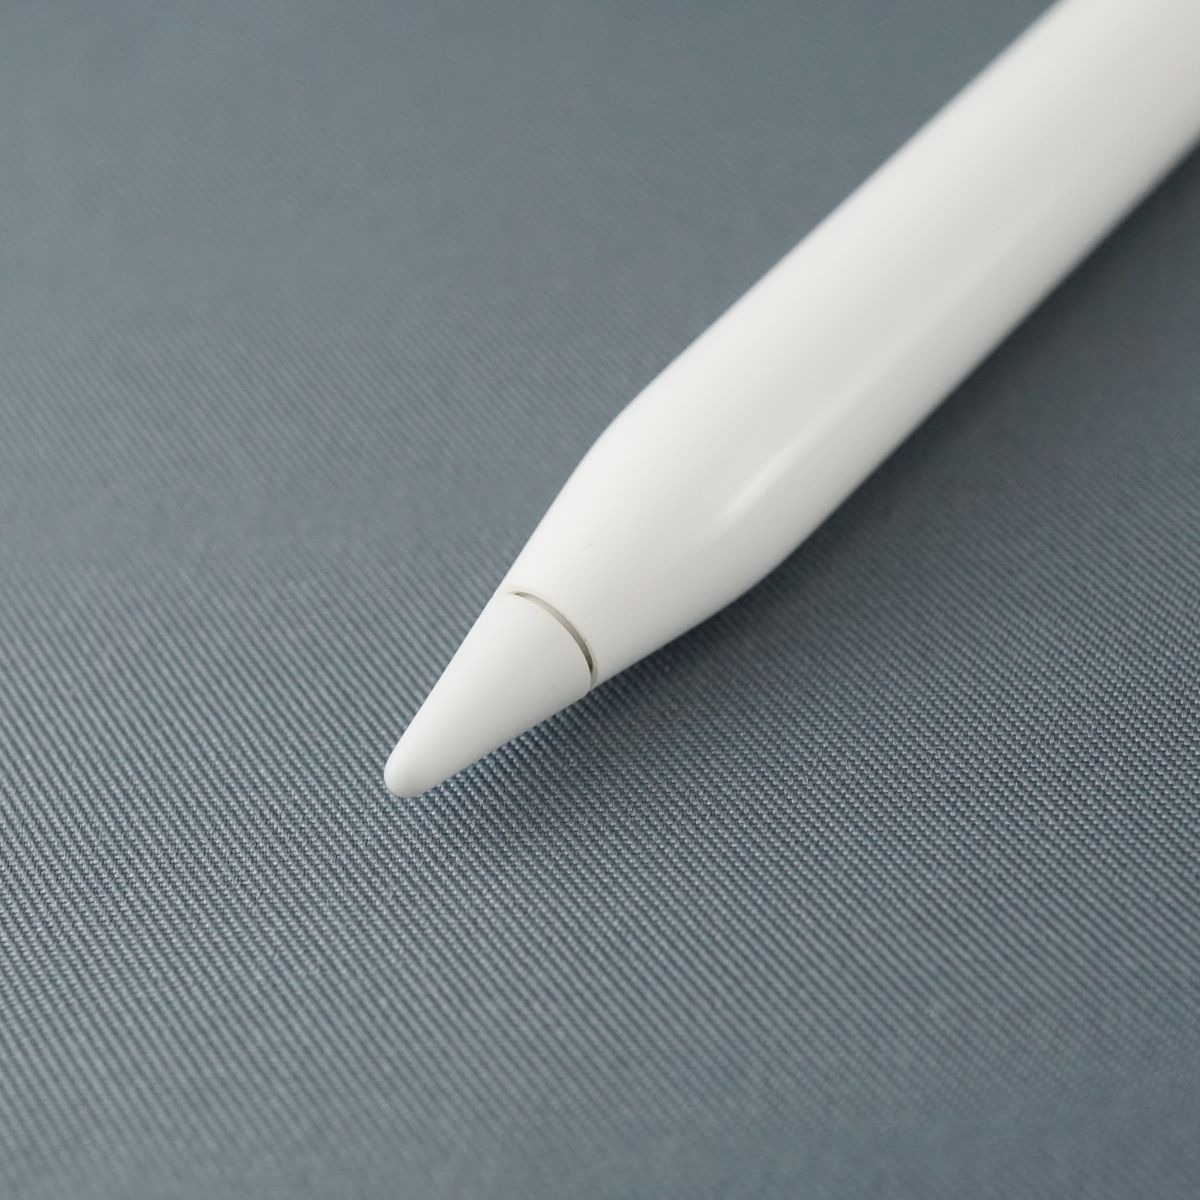 Apple Pencil アップルペンシル USED美品 本体のみ 第一世代 A1603 MK0C2J/A 完動品 安心保証 即日発送 KR V9015